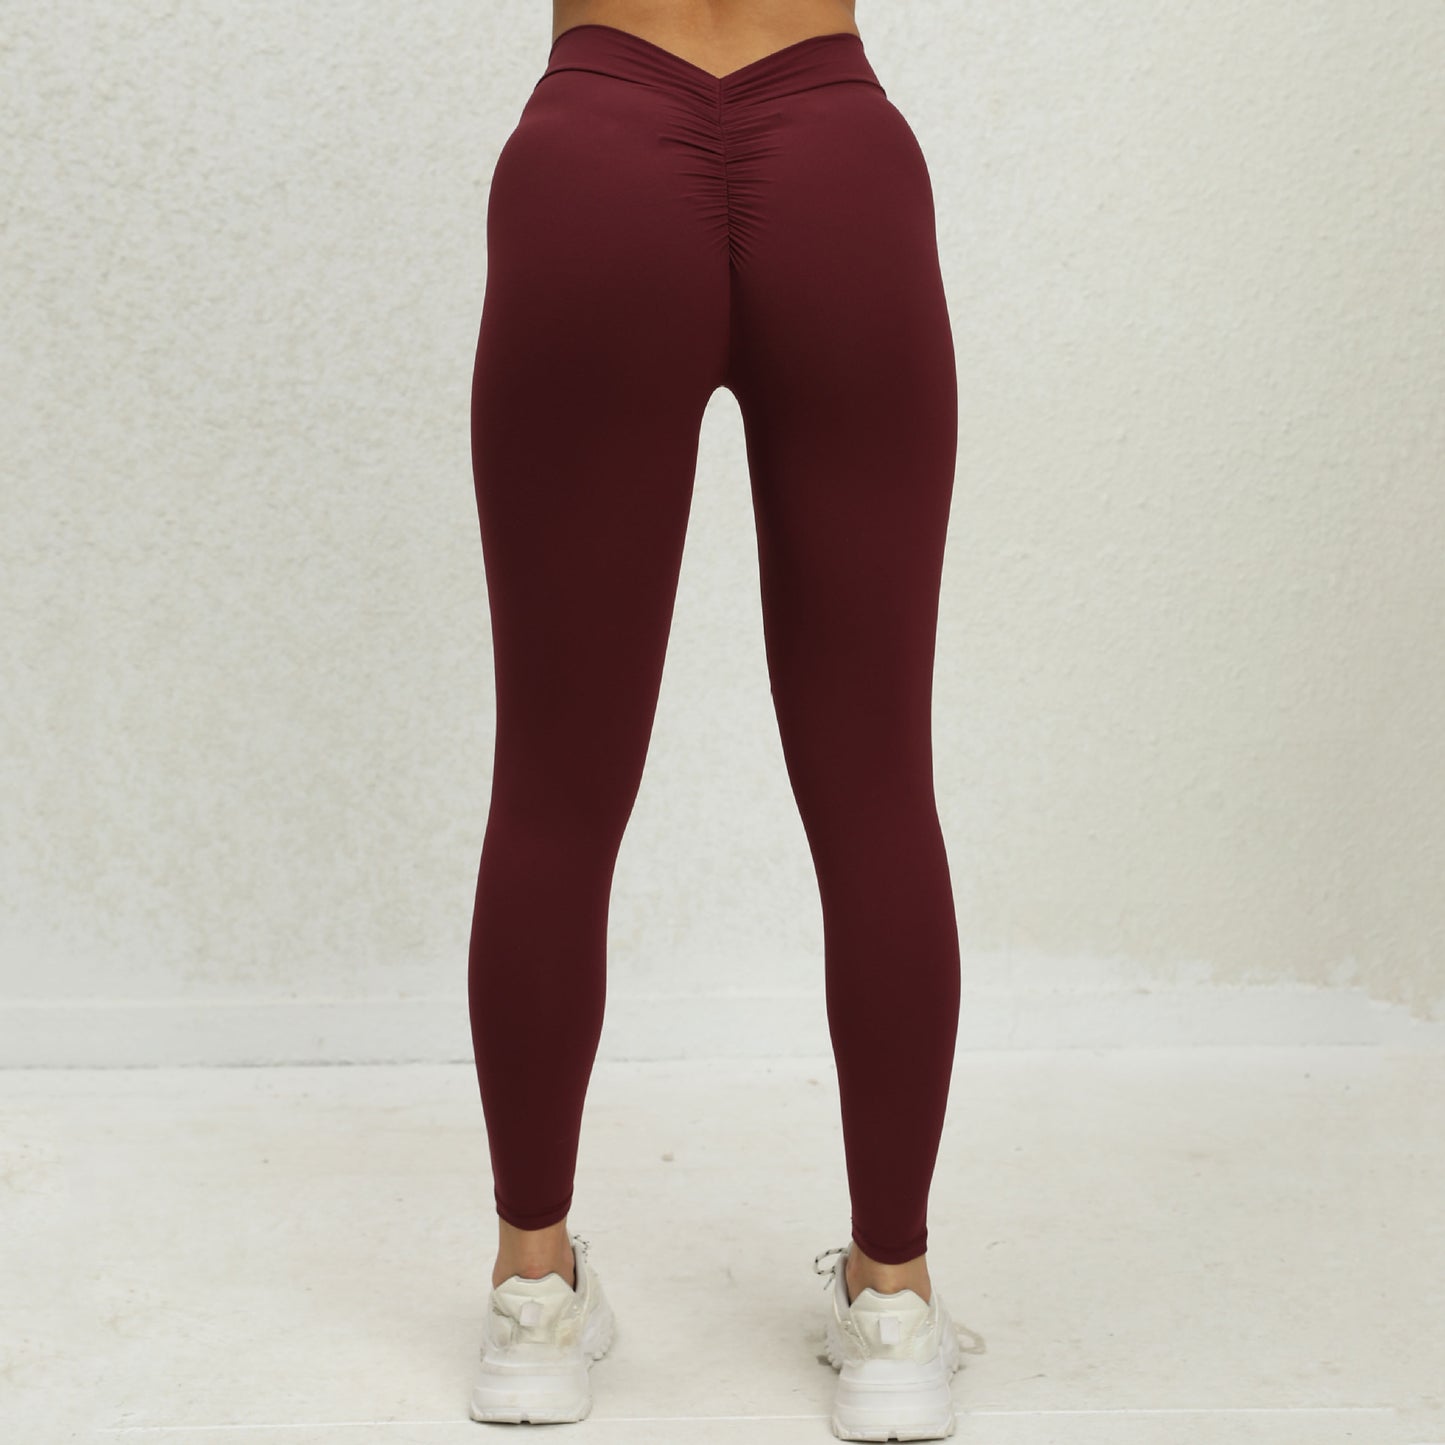 Fitness Yoga Pants V waist hip tight sweatpants 13 colors